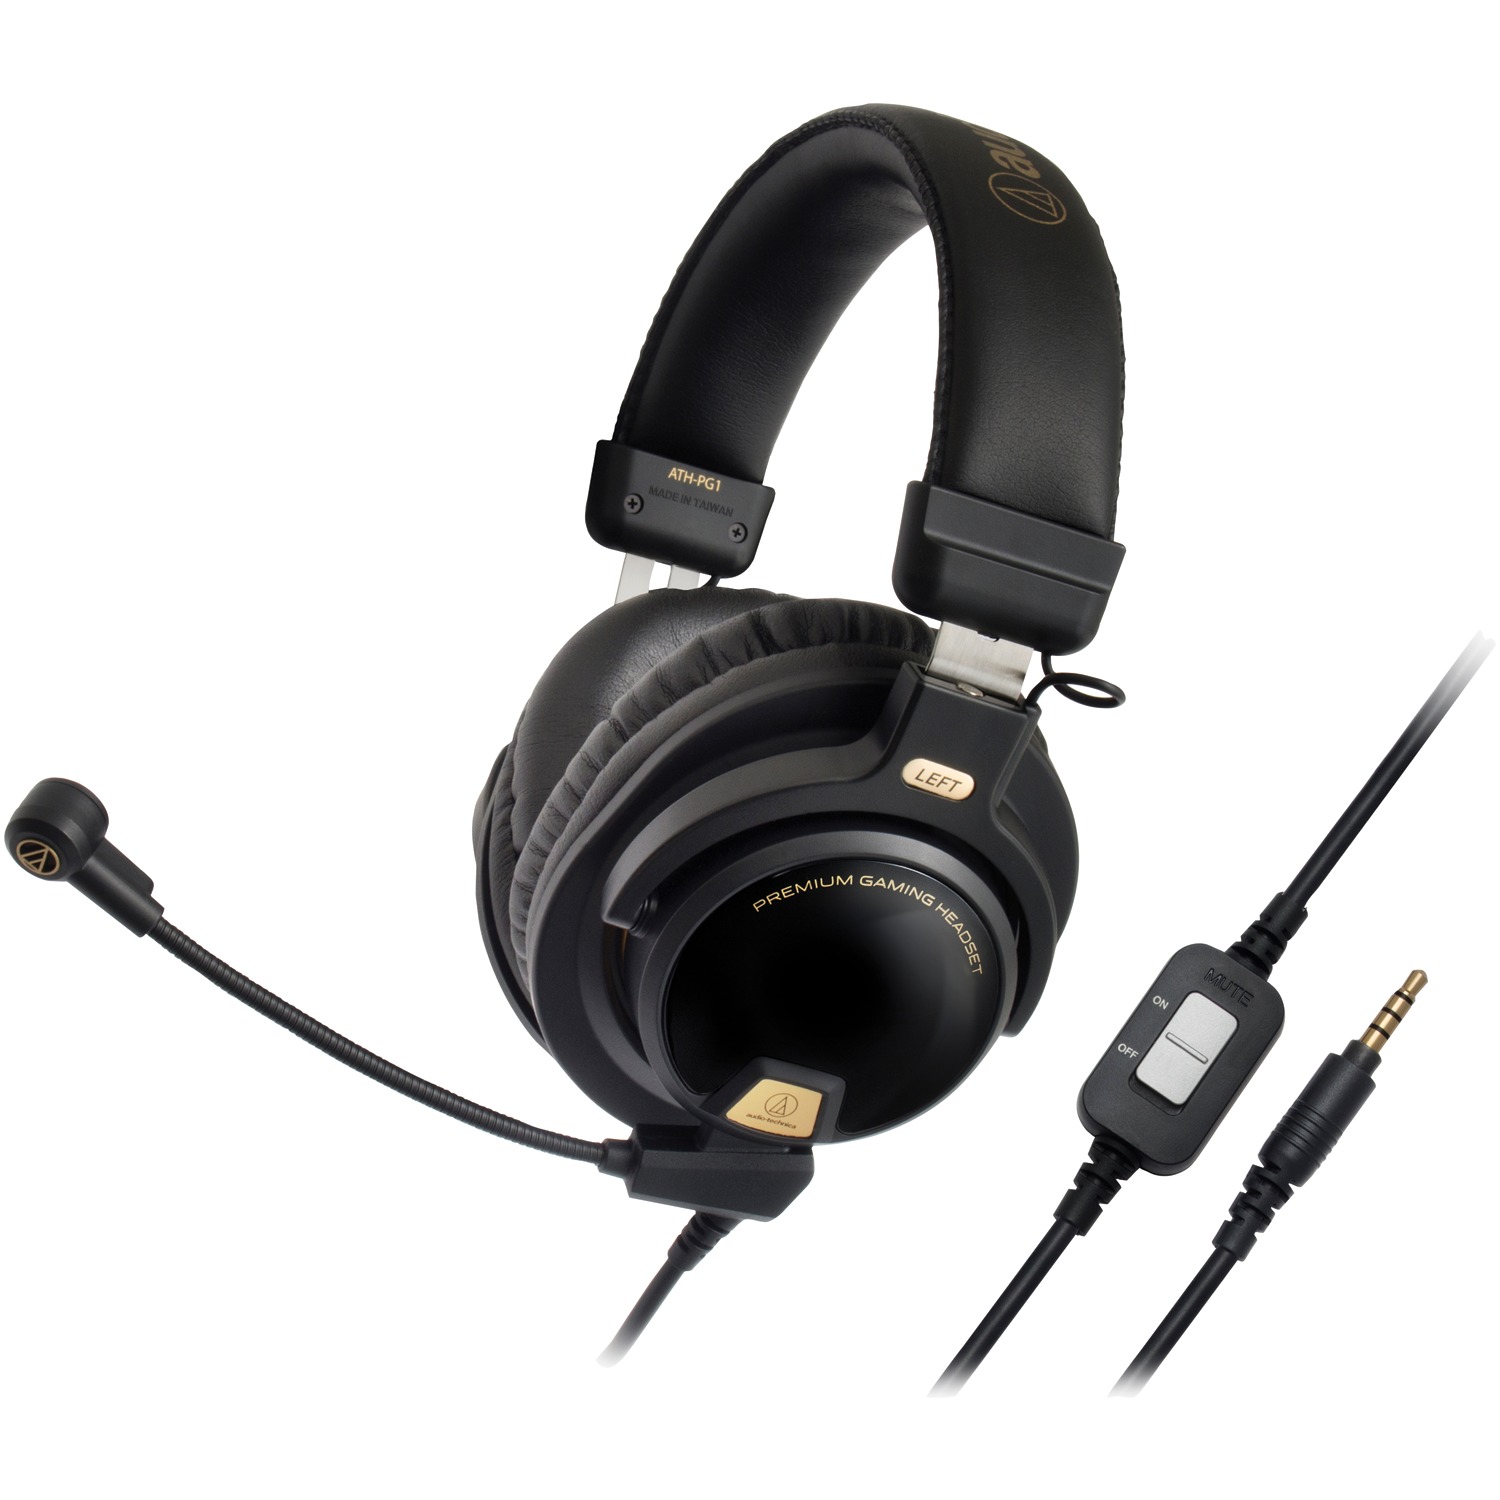 Audio-Technica ATH-PG1 Premium Gaming Headset - image 1 of 2